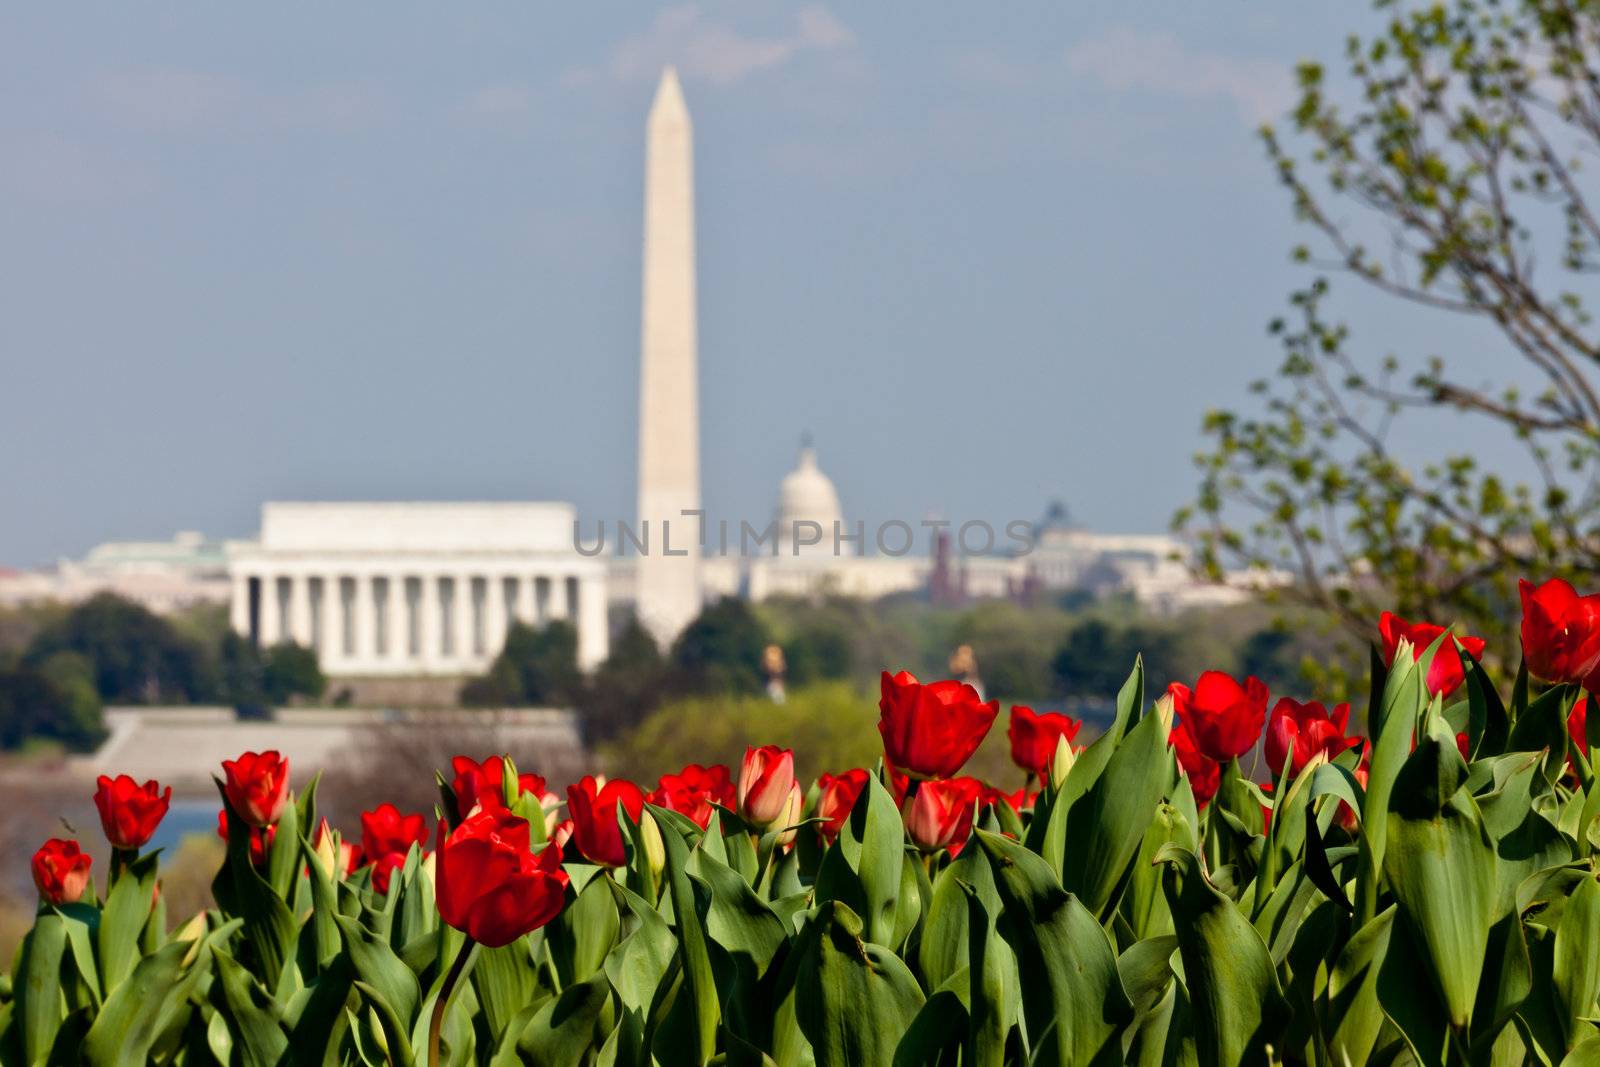 Washington DC Skyline with Lincoln Memorial, Washington Monument by DashaRosato